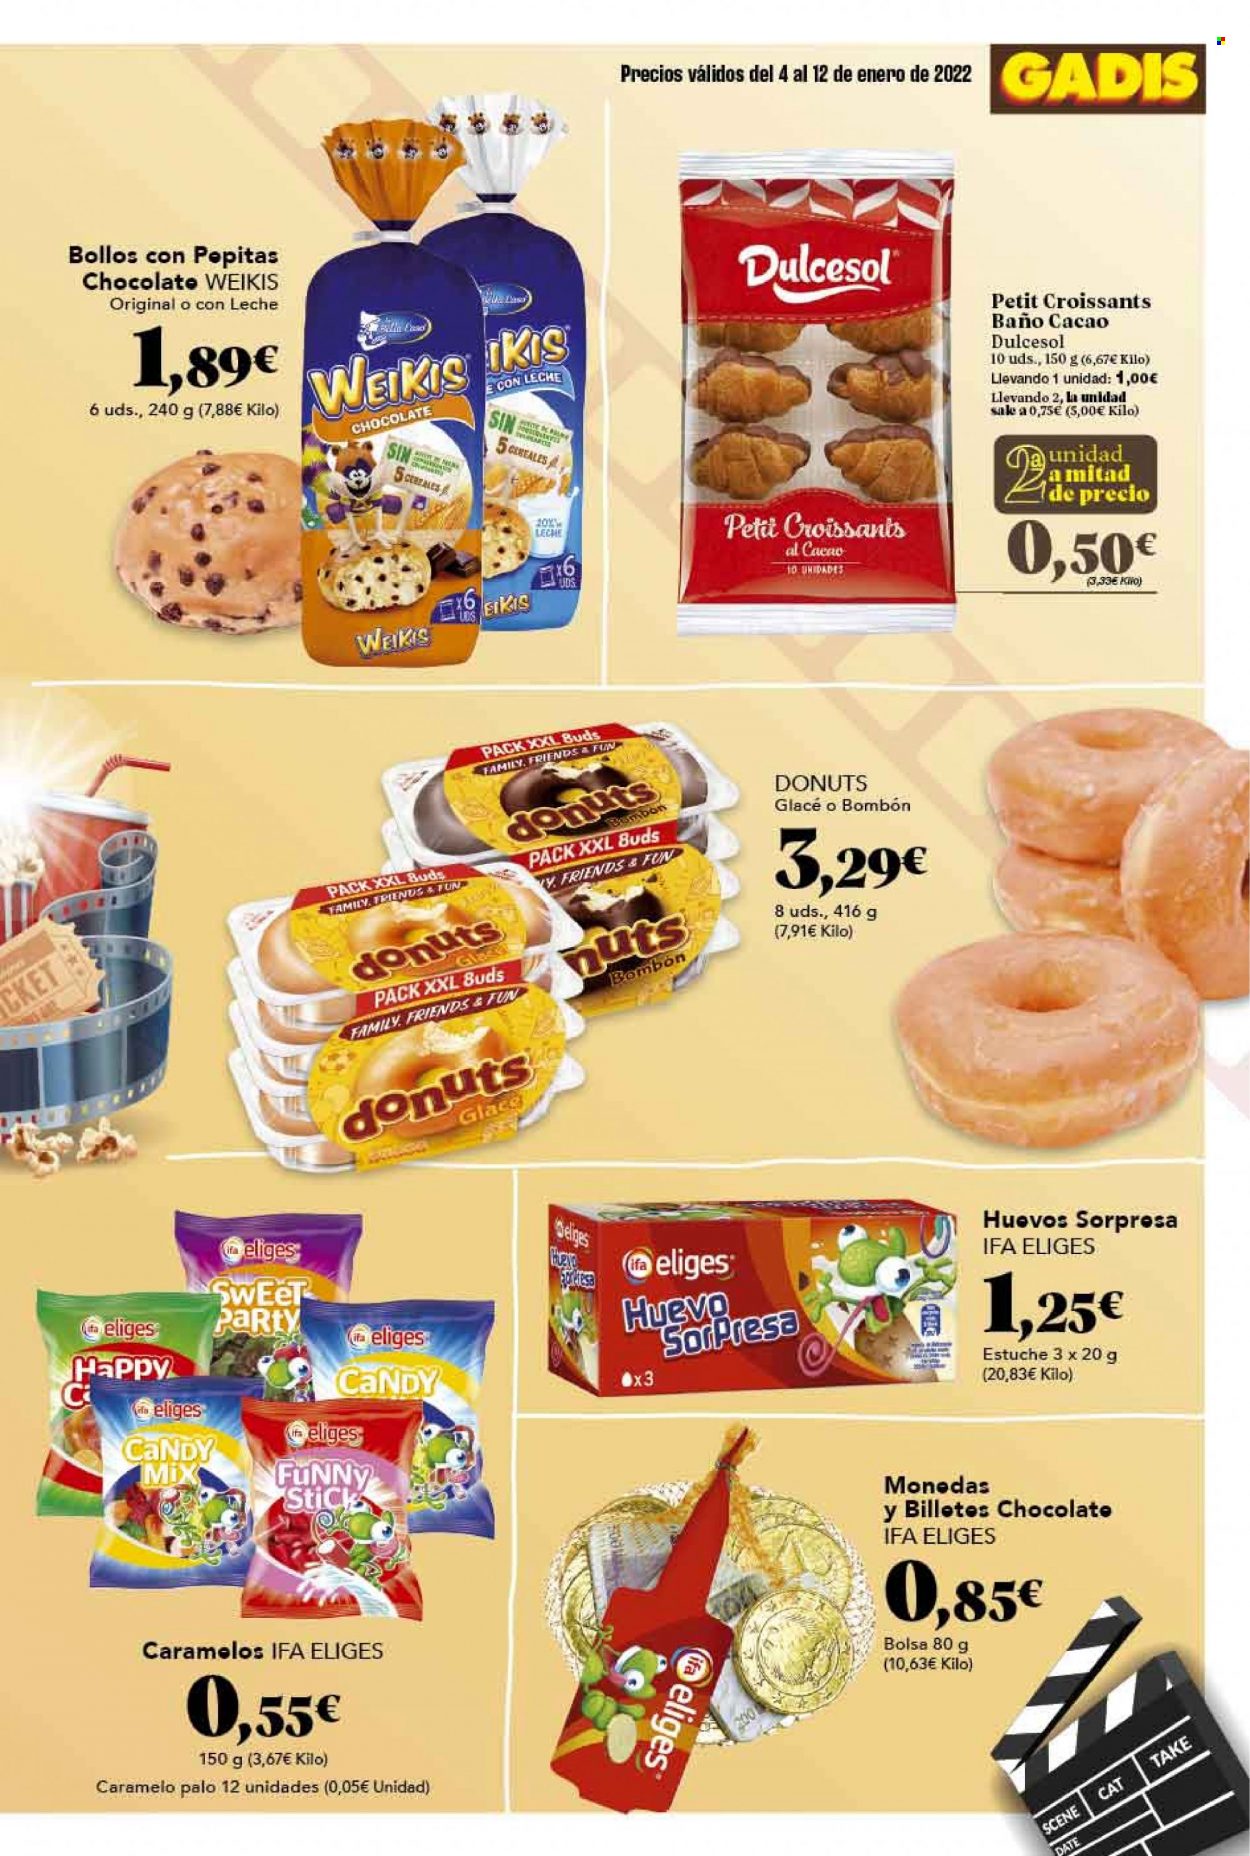 thumbnail - Folleto actual Gadis - 04/01/22 - 12/01/22 - Ventas - Dulcesol, donut, croissant, huevo, bombones, caramelos, cacao, neceser. Página 17.